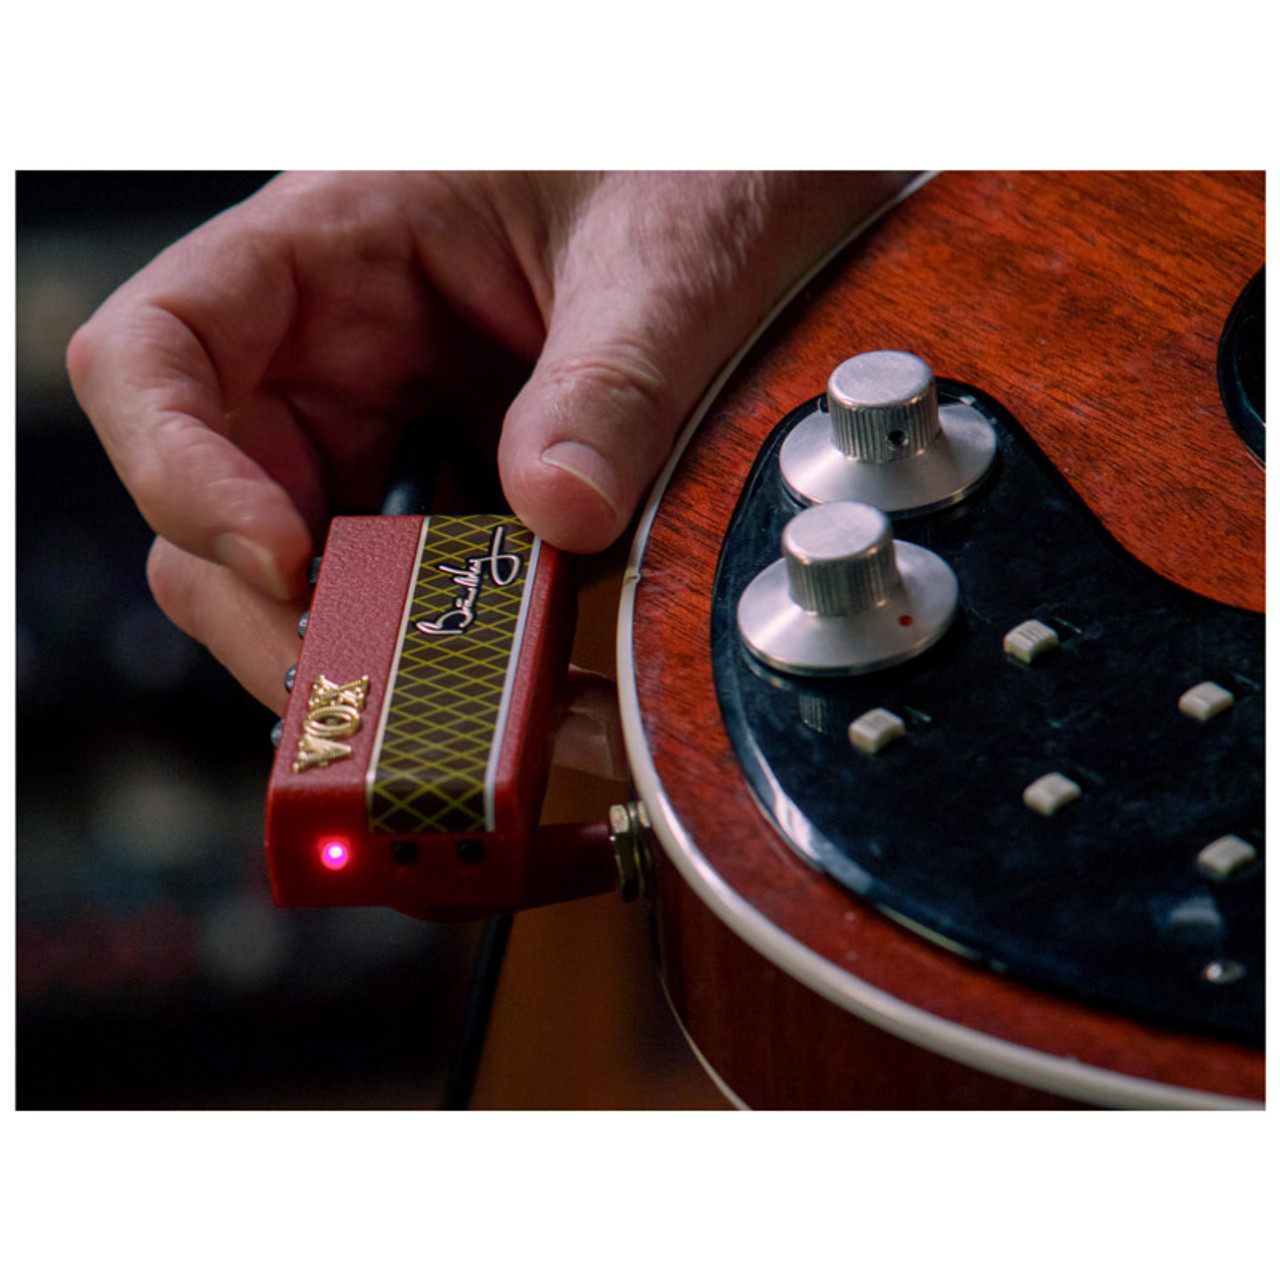 VOX Brian May Signature amPlug Headphone Guitar Amplifier